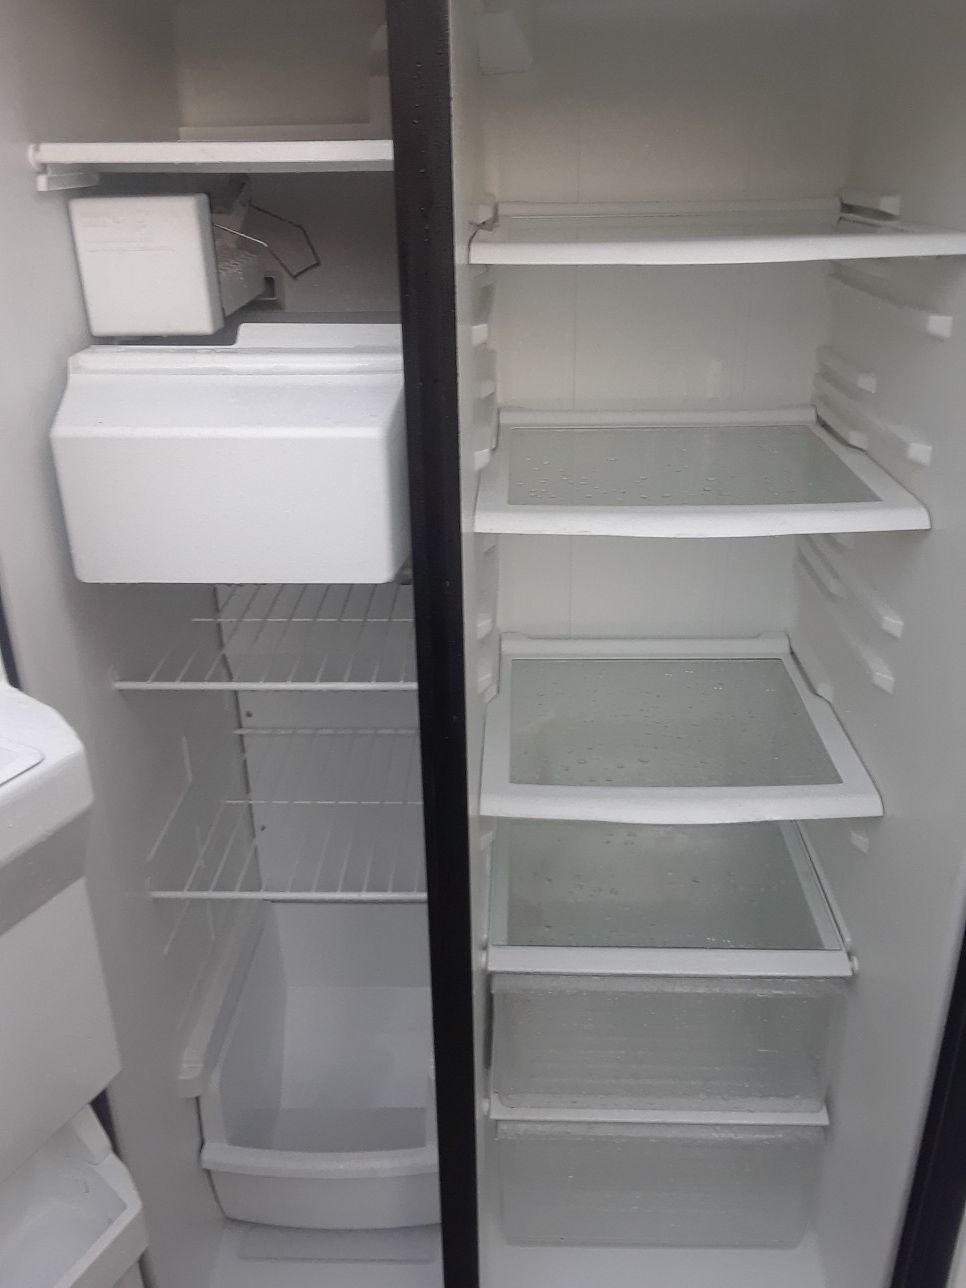 worldpool fridge